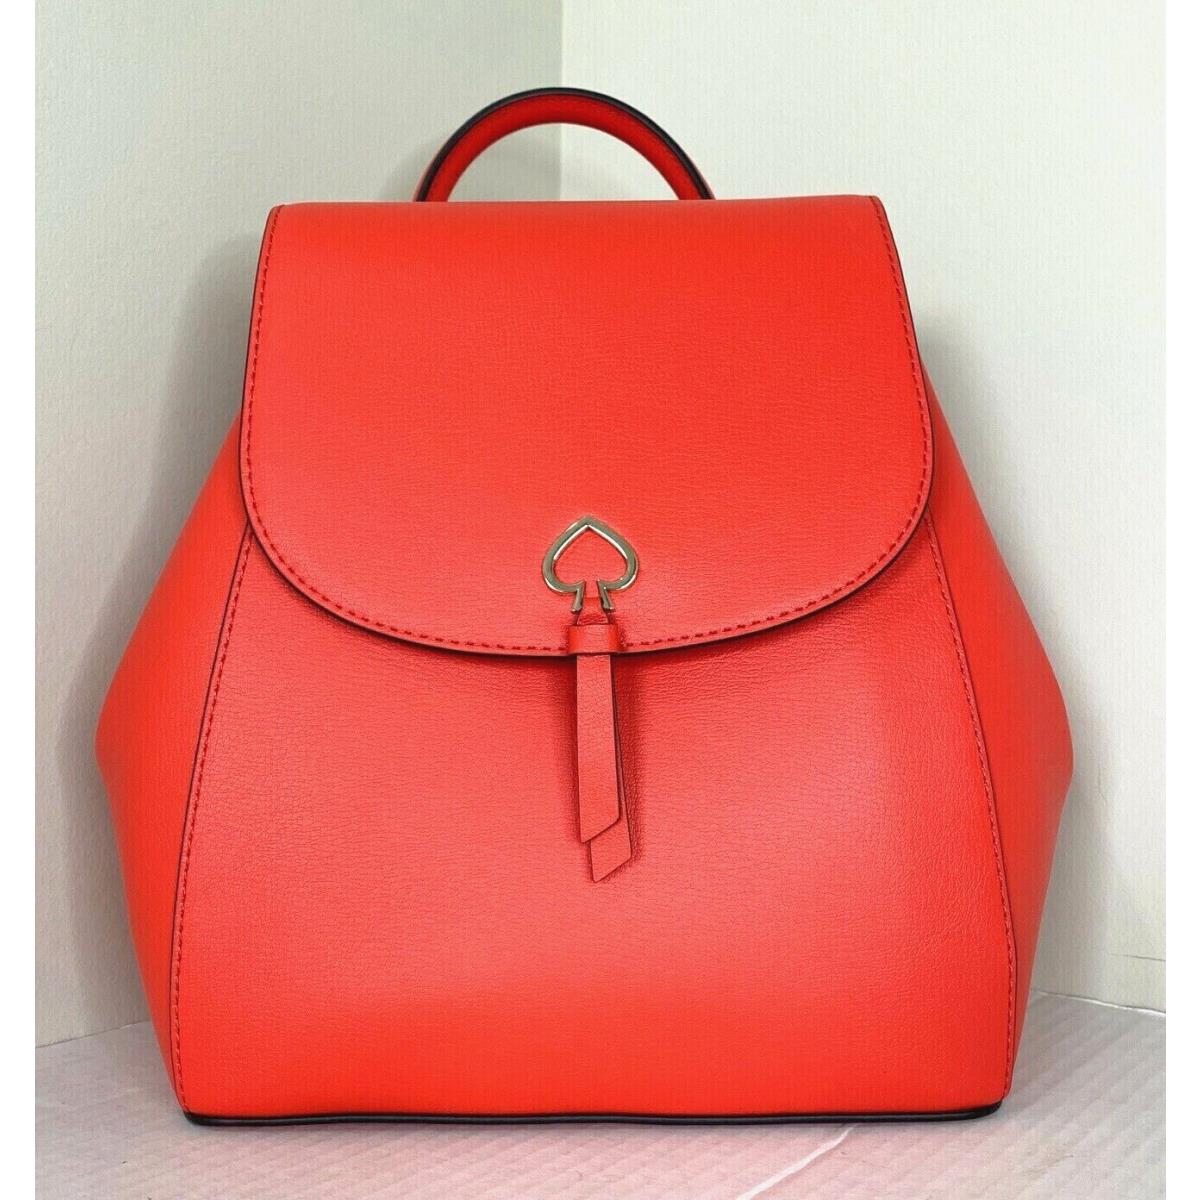 New Kate Spade Adel Medium Backpack Leather Geranium Orange Red with Dust Bag